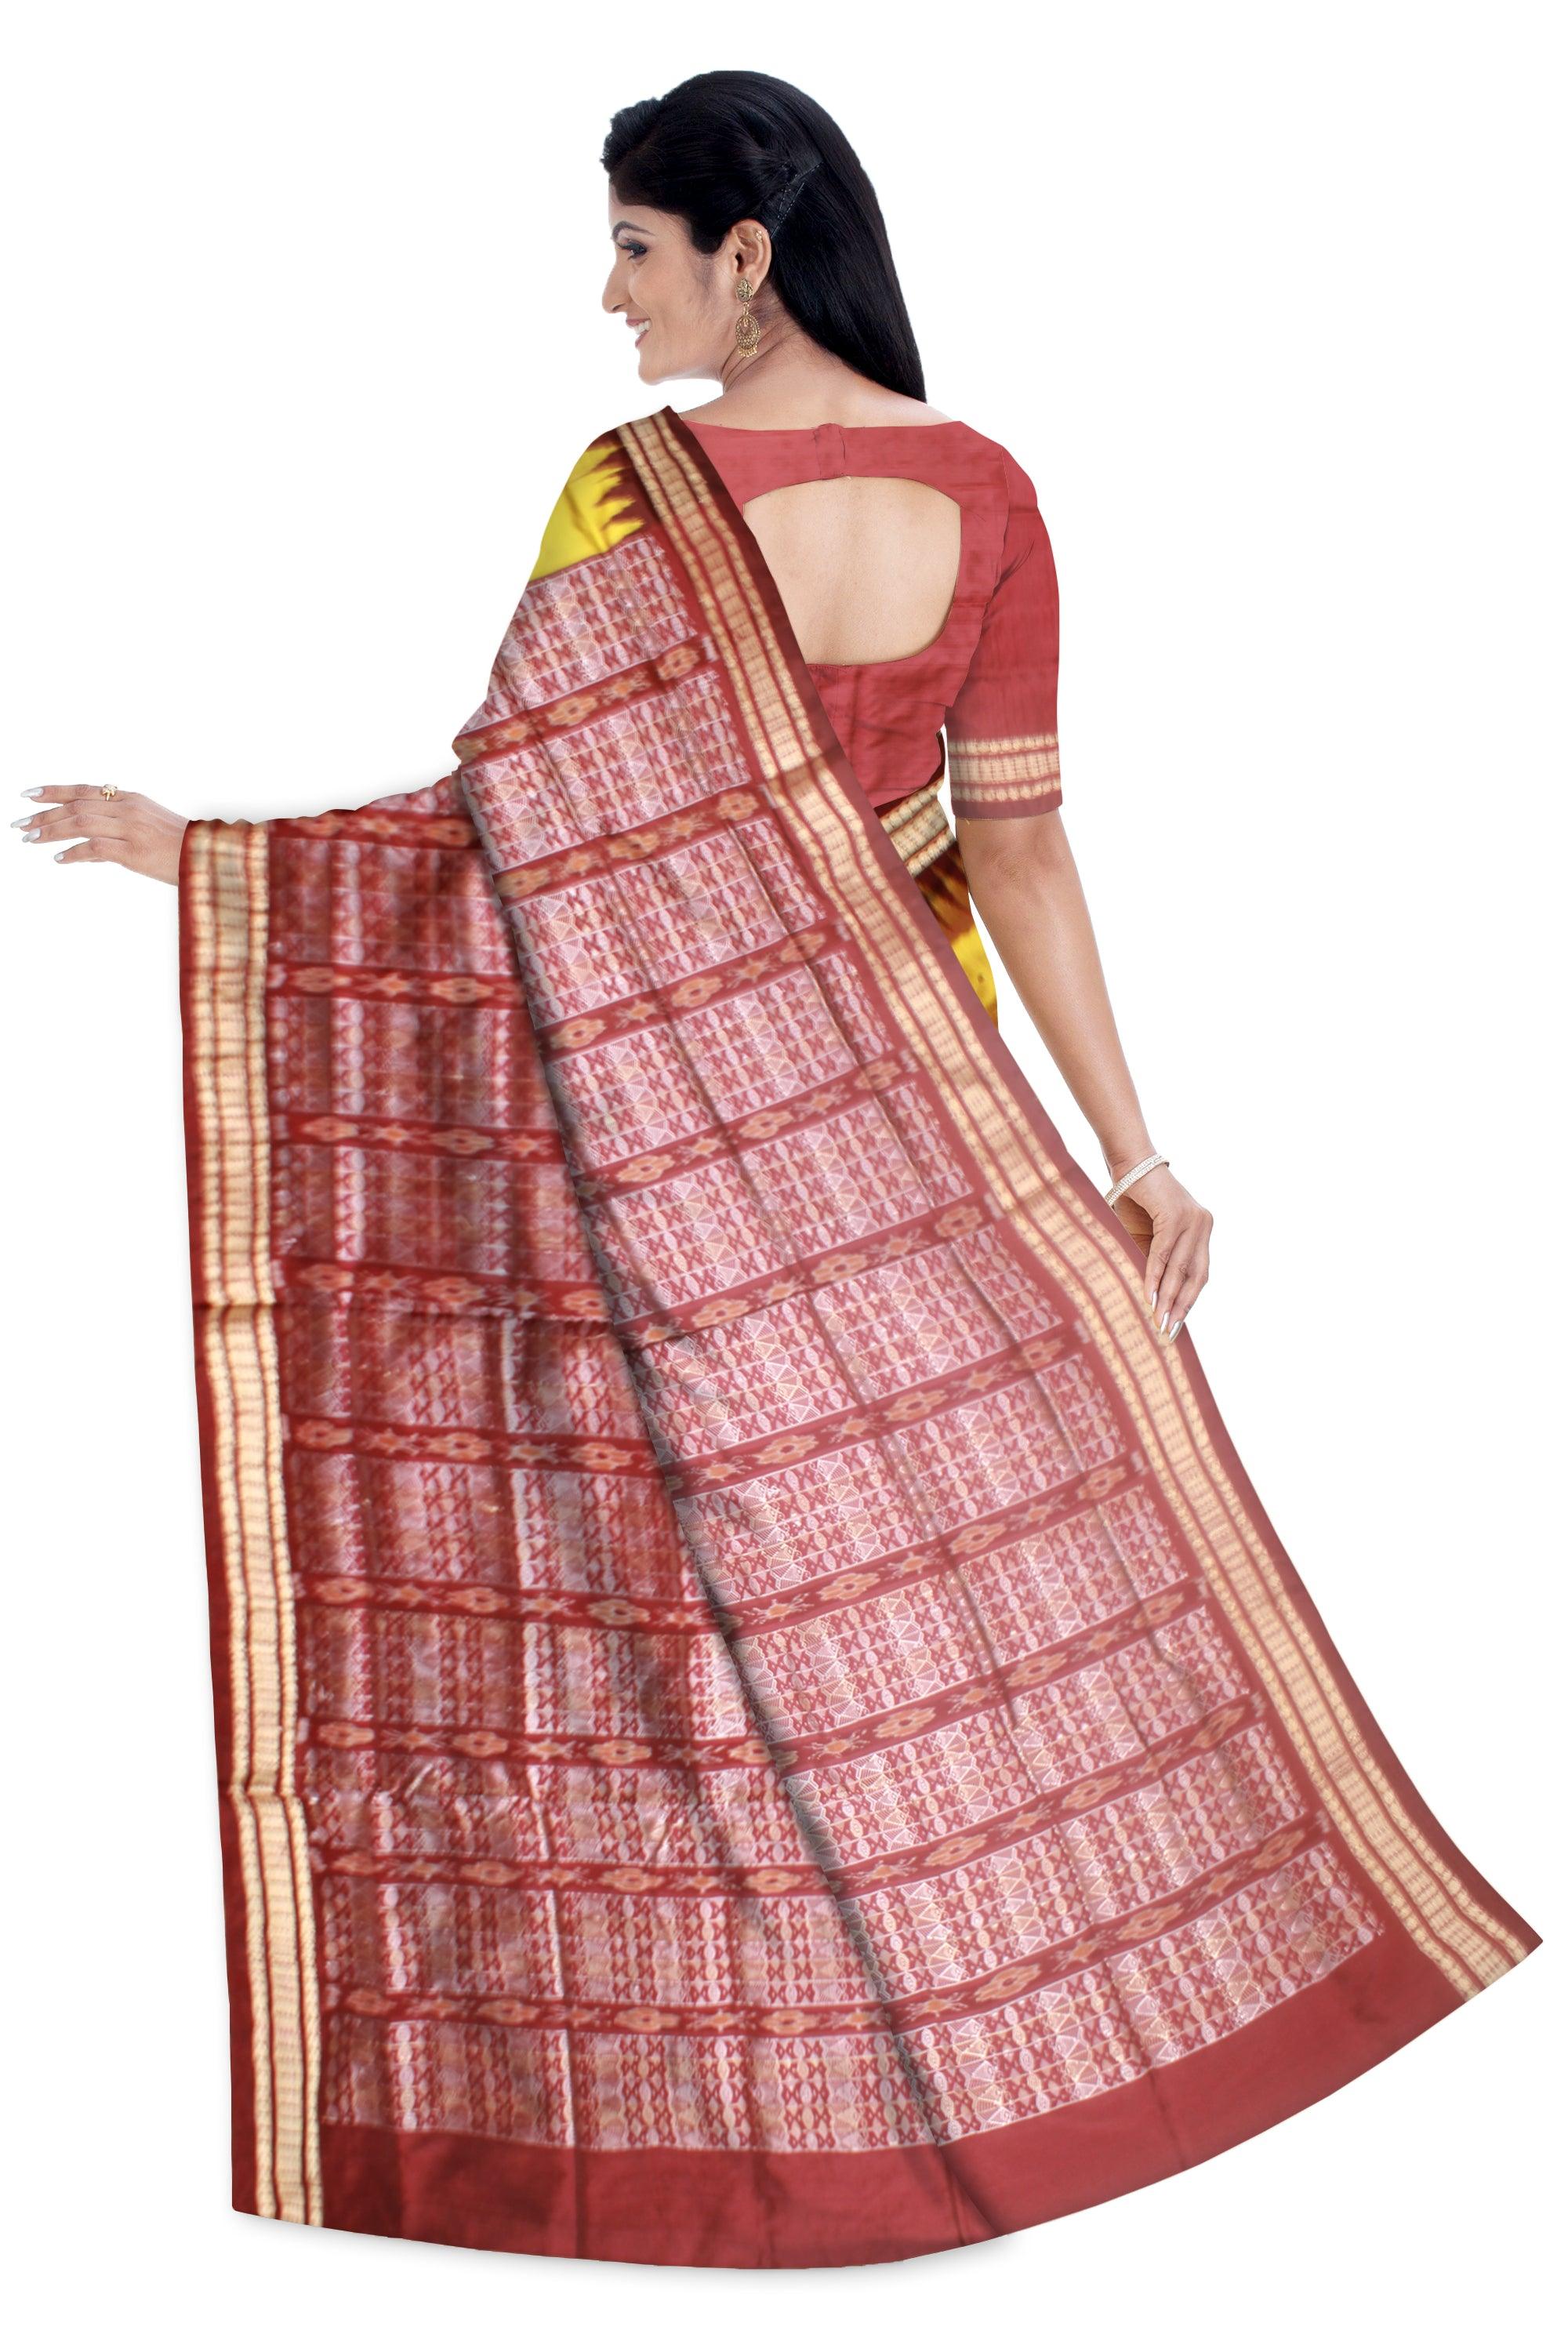 Sambalpuri Pata Saree in yellow color plain bomkei Design with blouse piece. - Koshali Arts & Crafts Enterprise